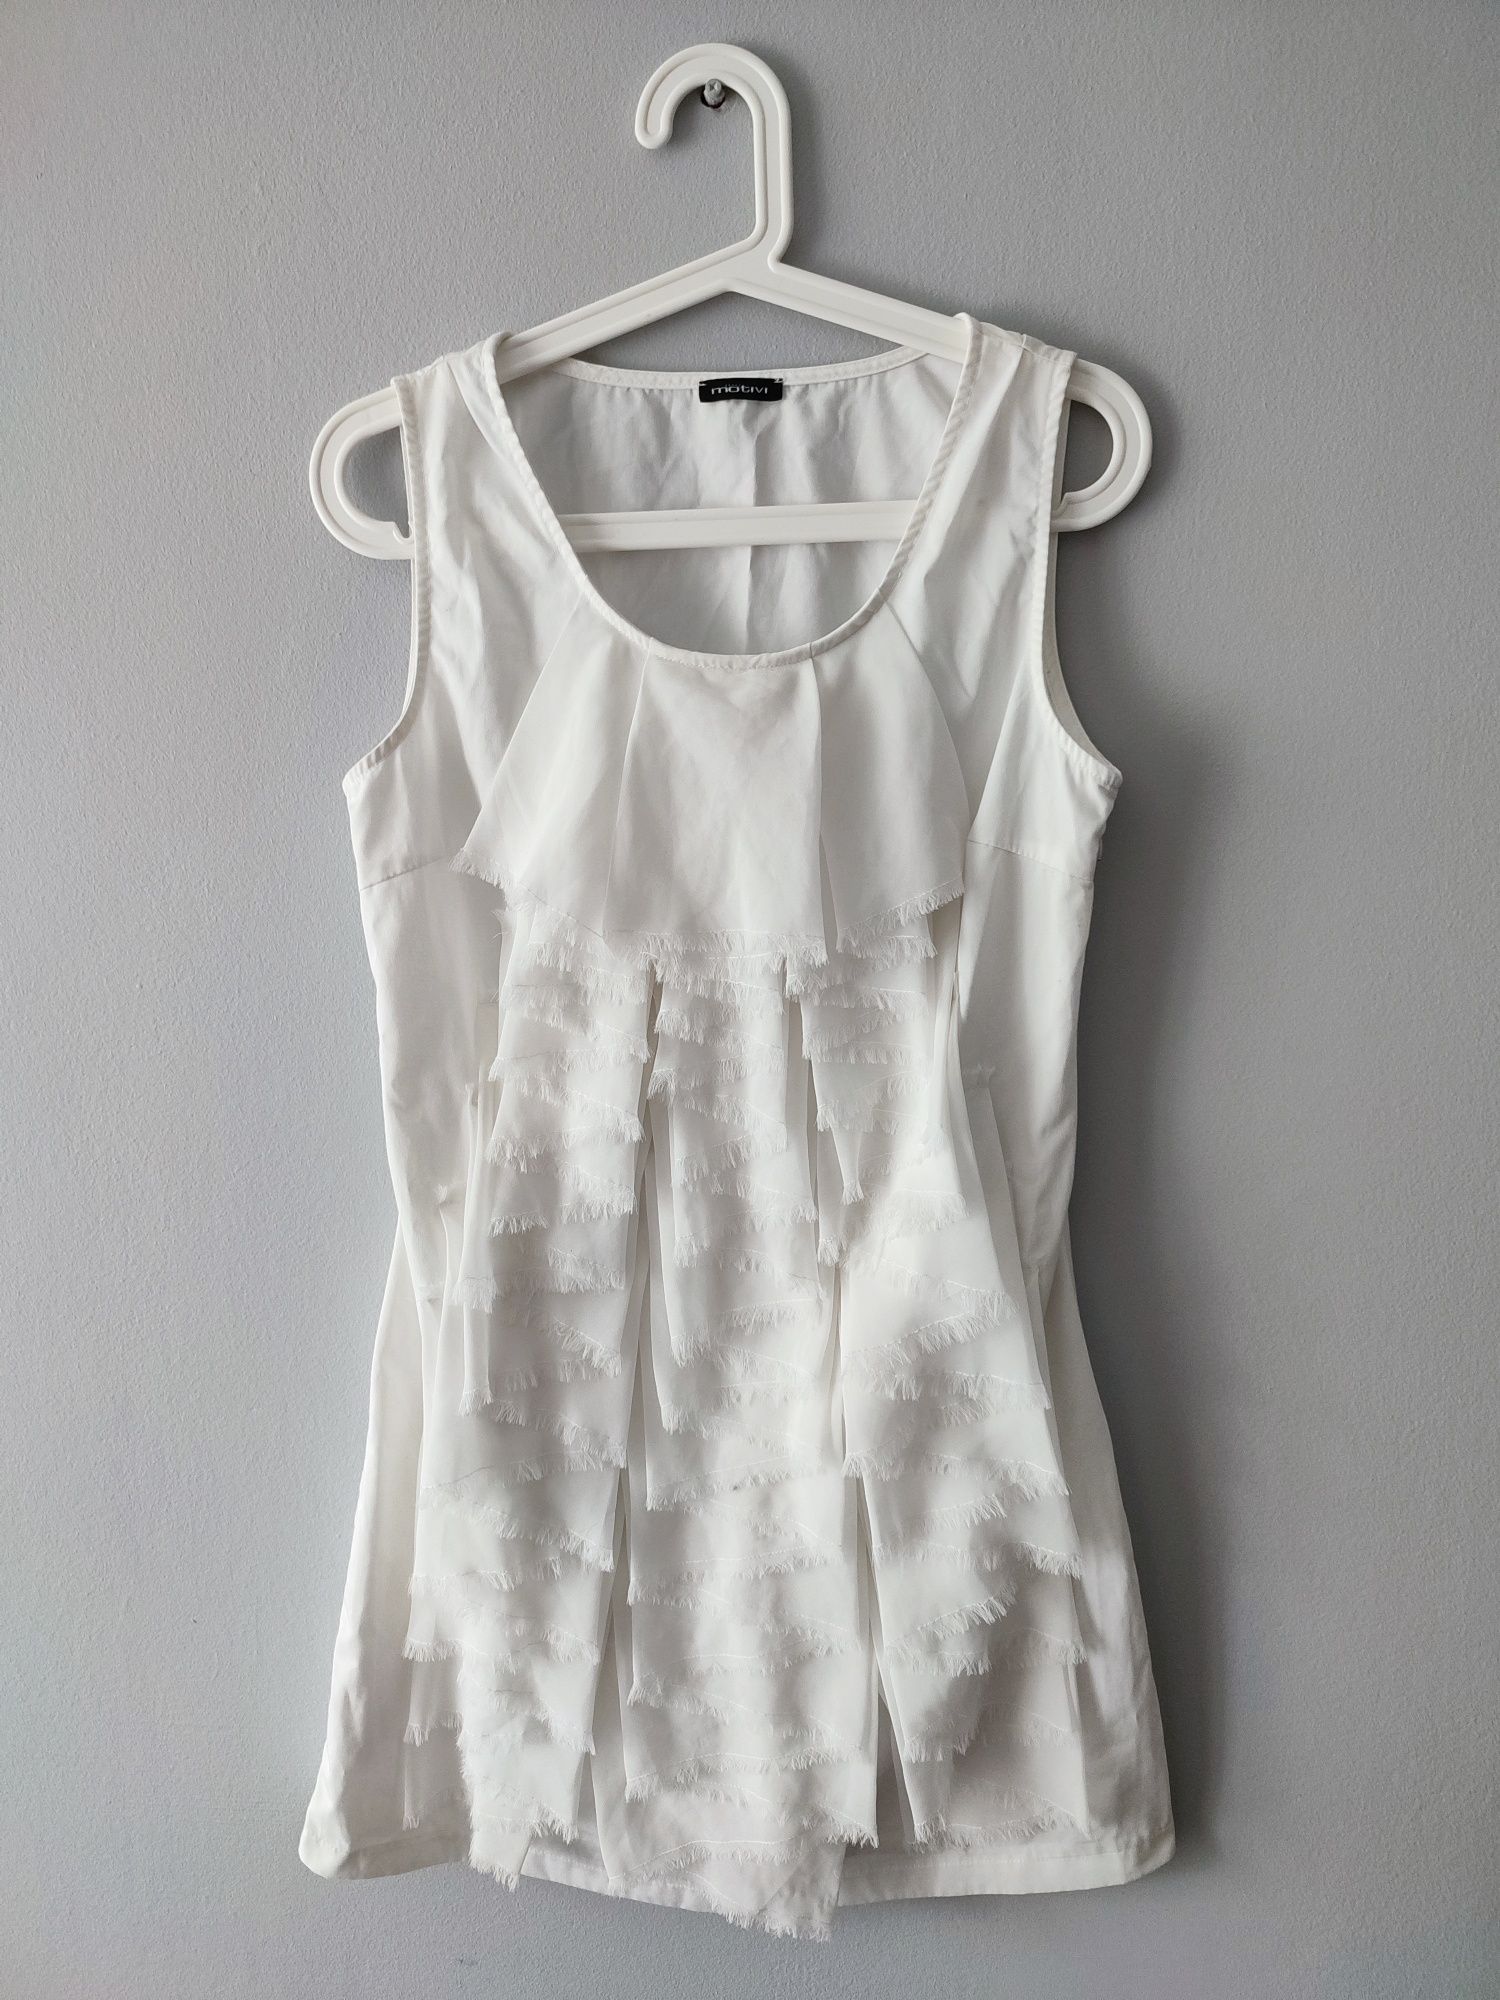 Biała sukienka Motivi falbanki żabot struktura klasyczna elegancka M